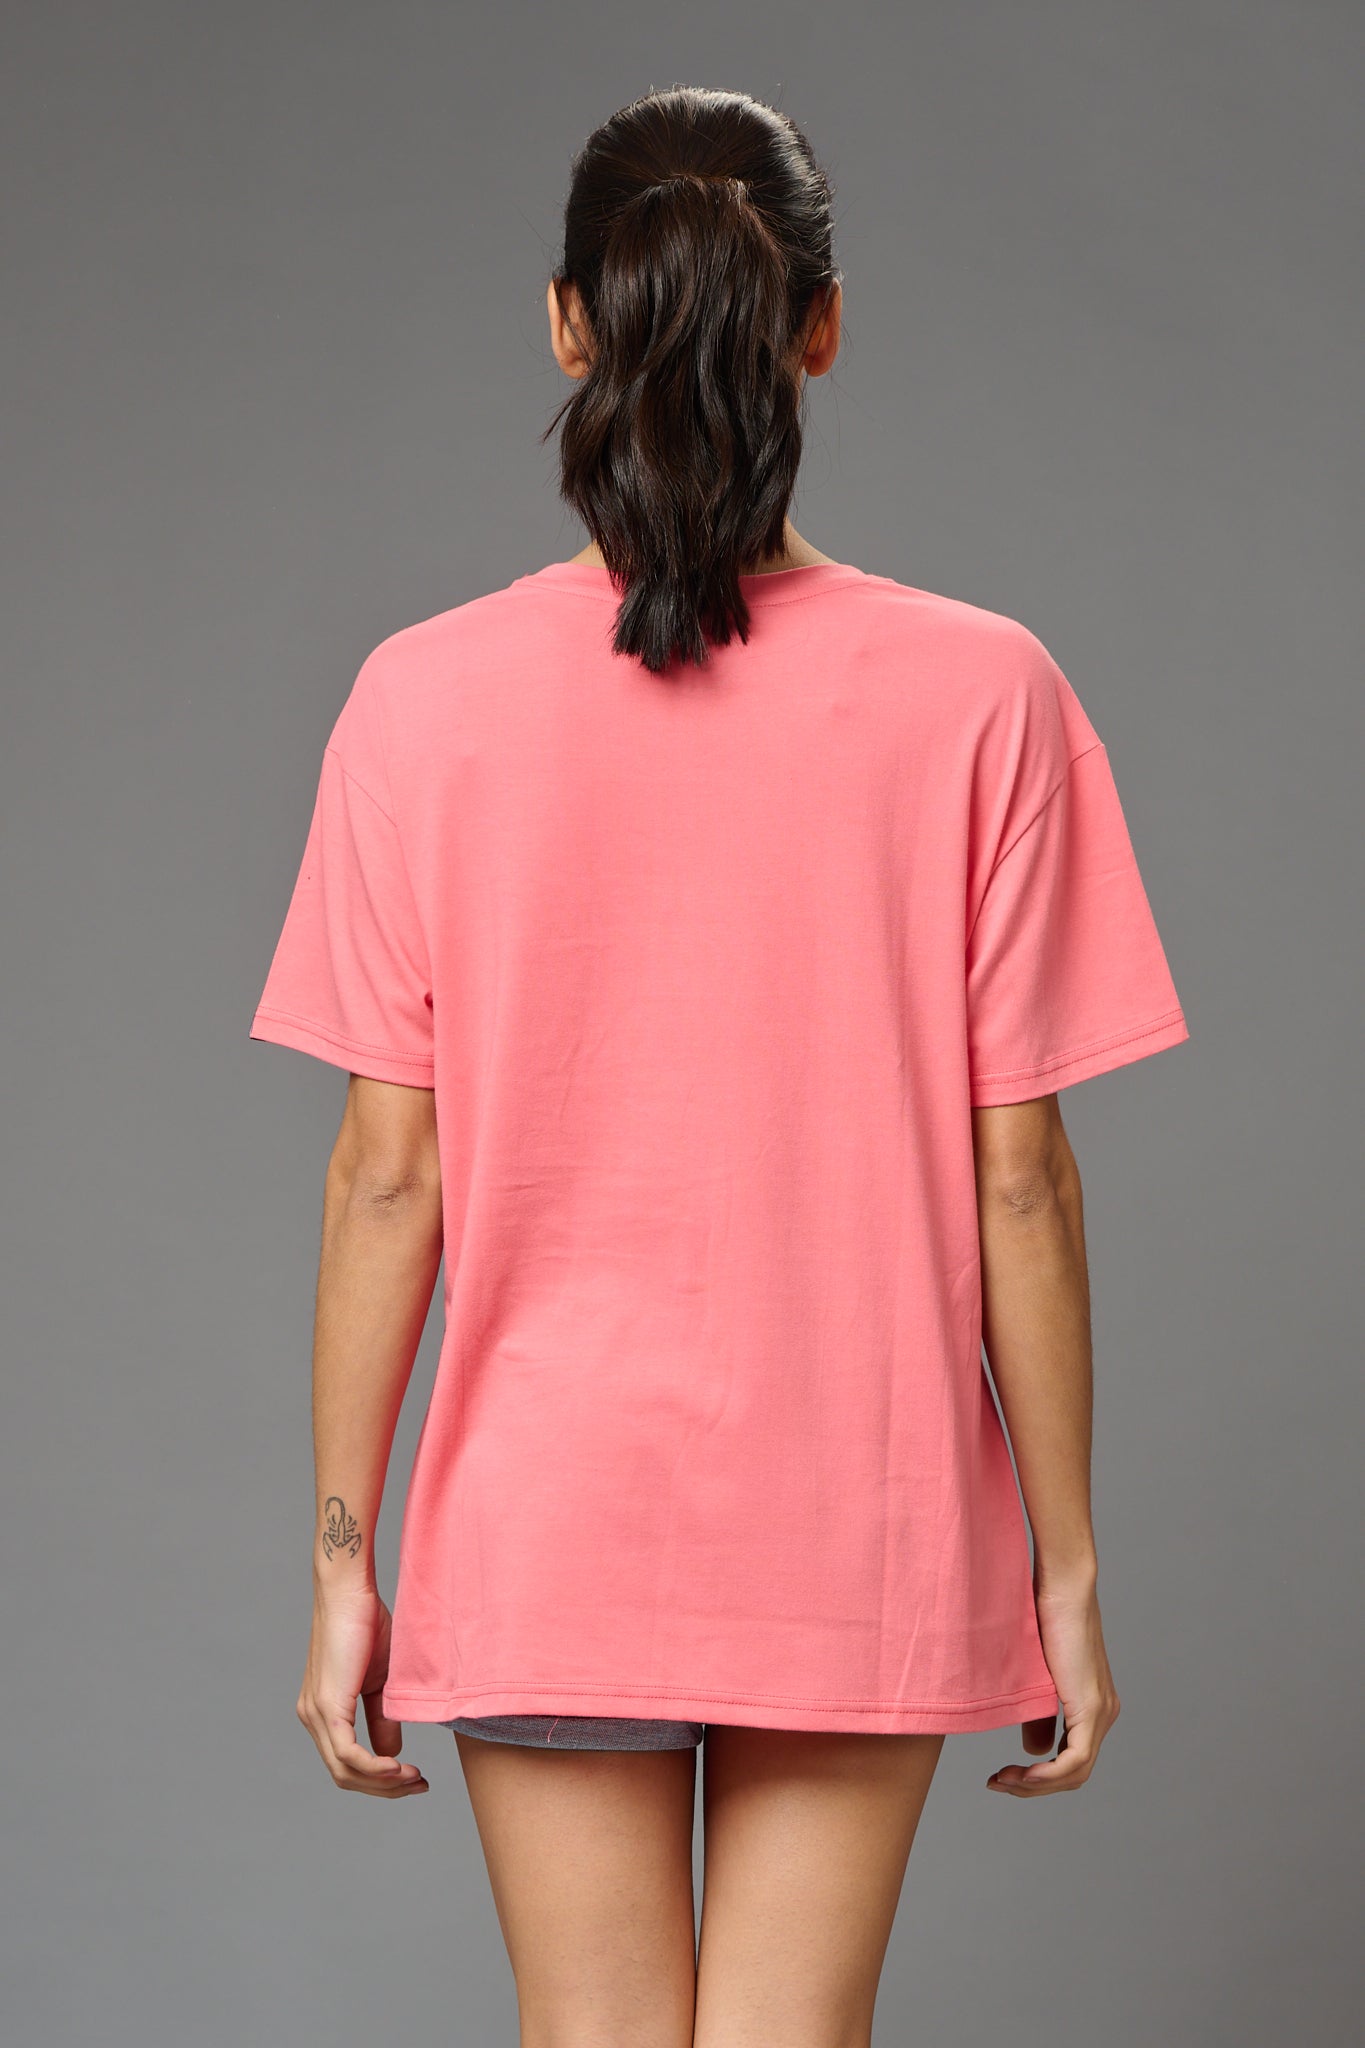 Moody Printed Pink Oversized T-Shirt for Women - Go Devil